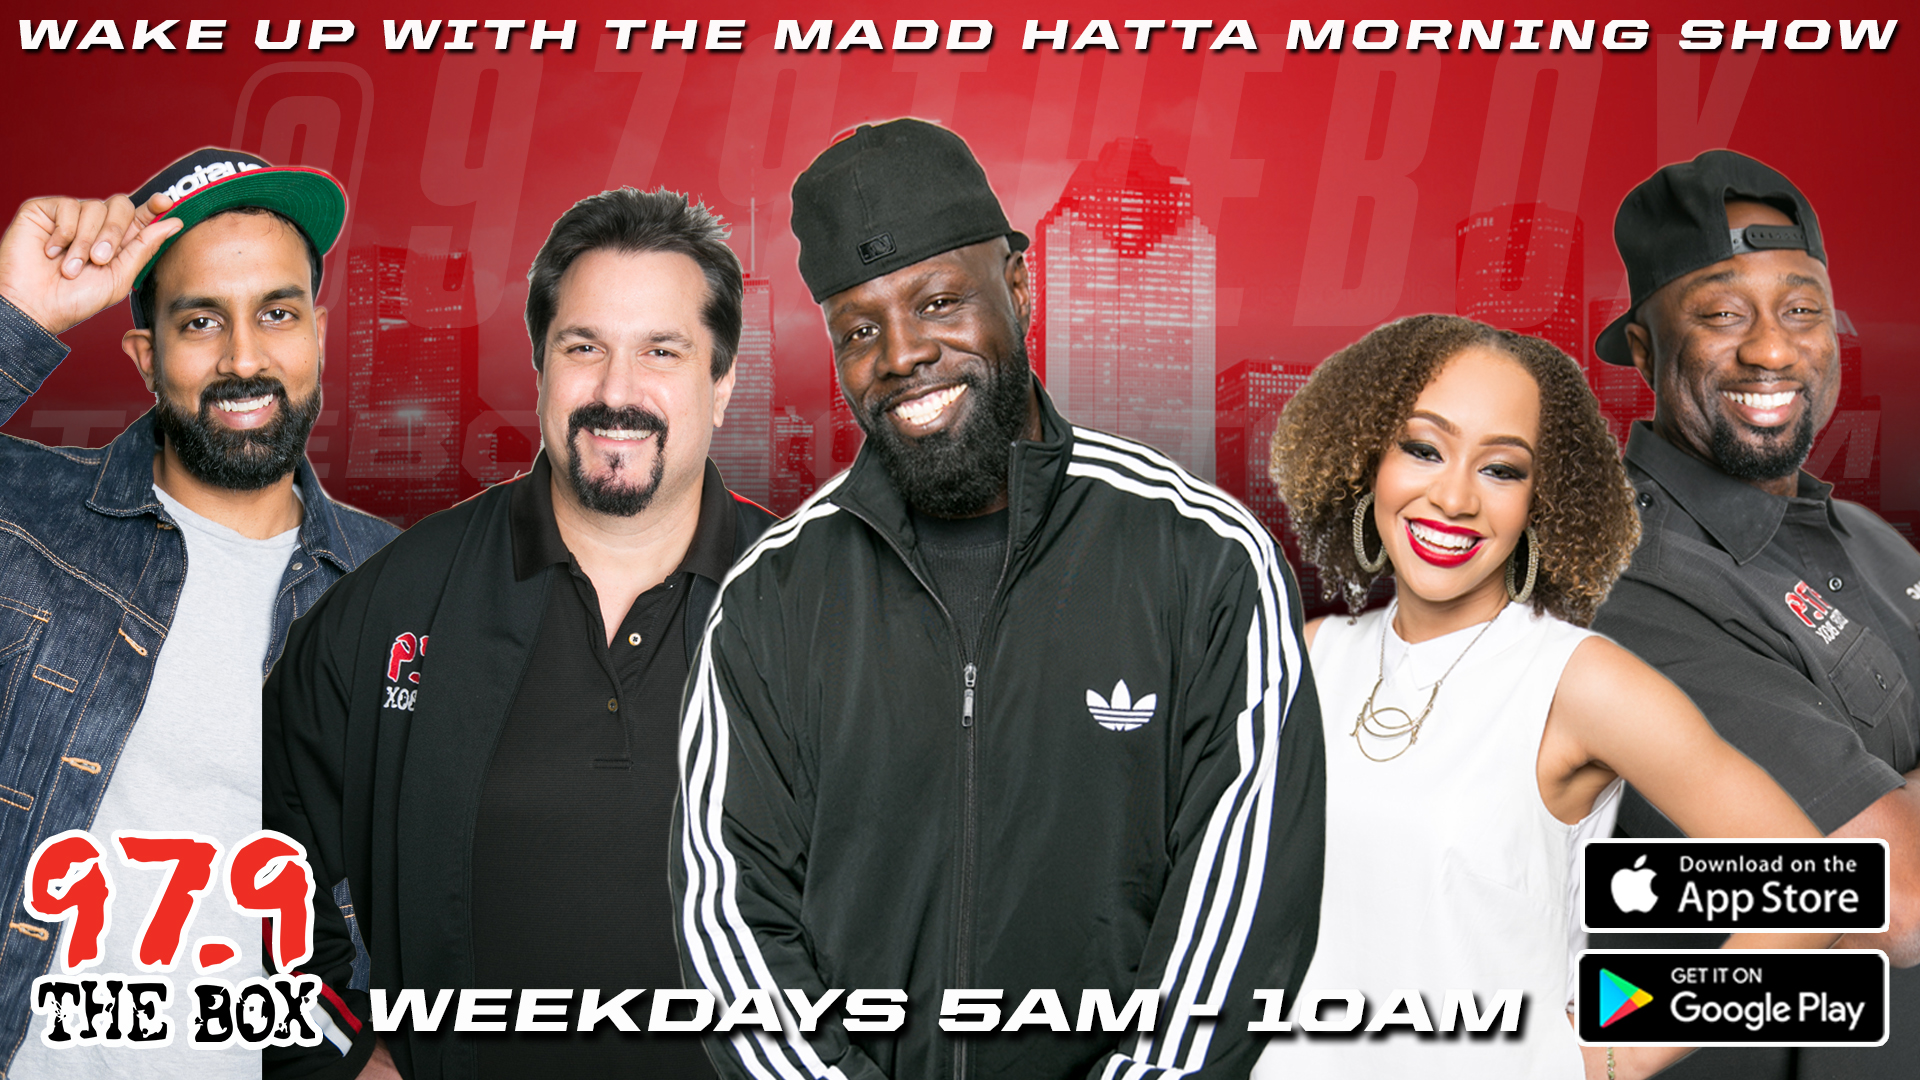 Madd Hatta Morning Show - 97.9 The Box Crew - HD Wallpaper 